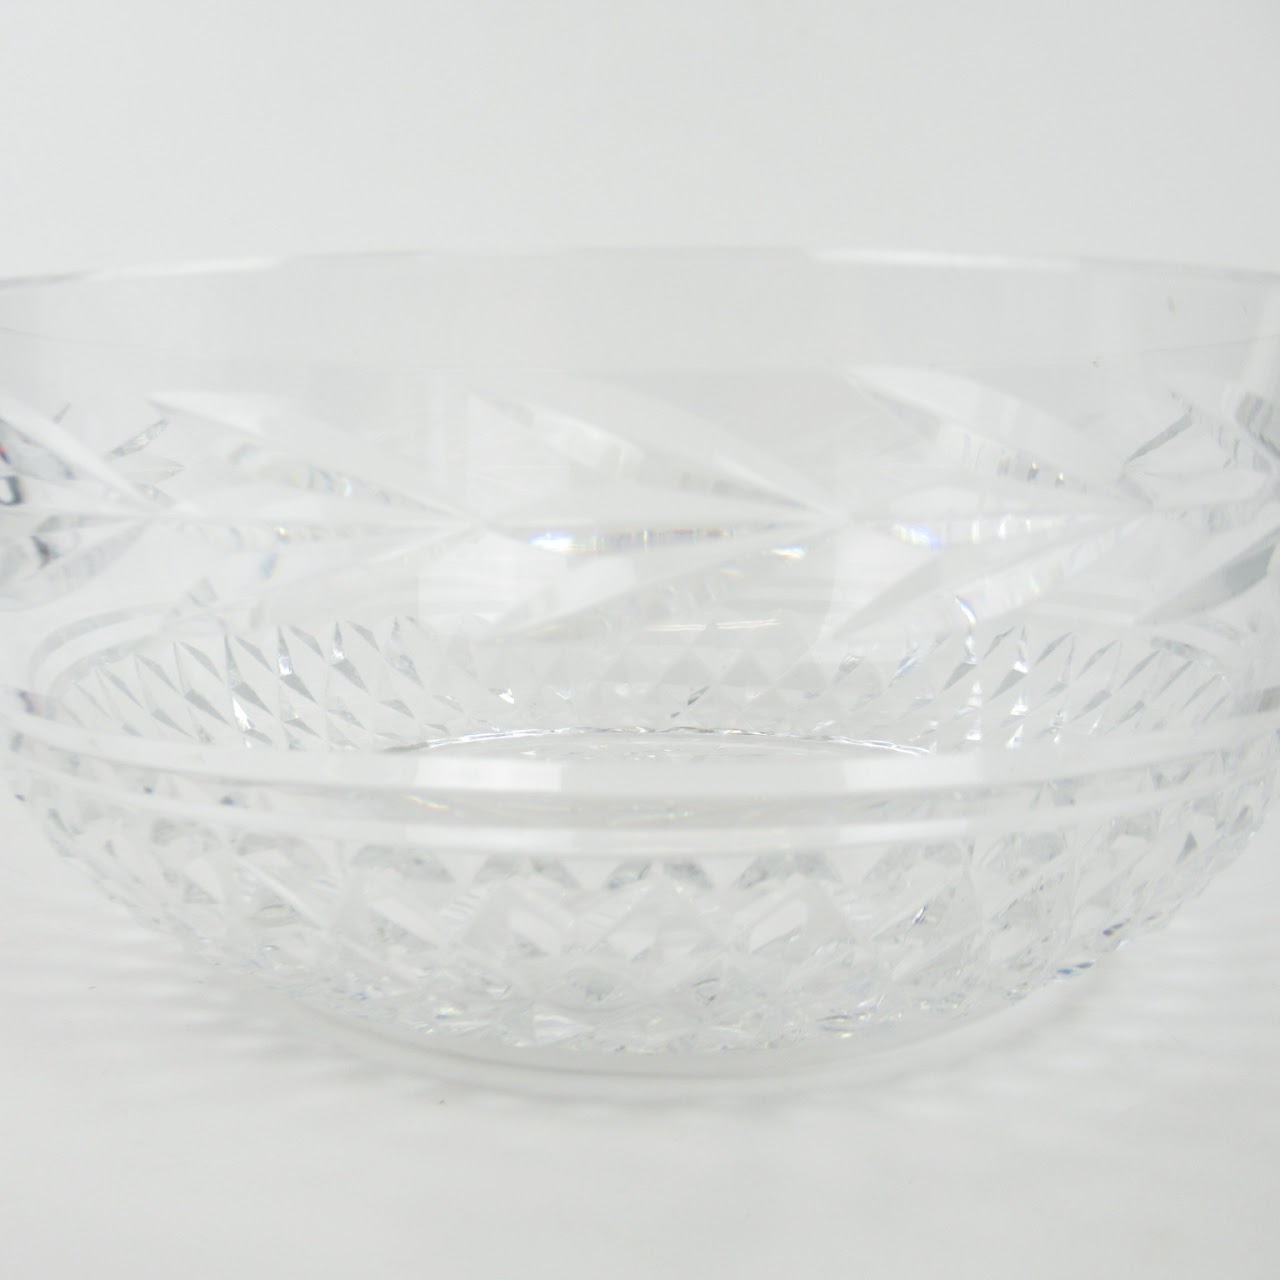 Waterford Cut Crystal Bowl